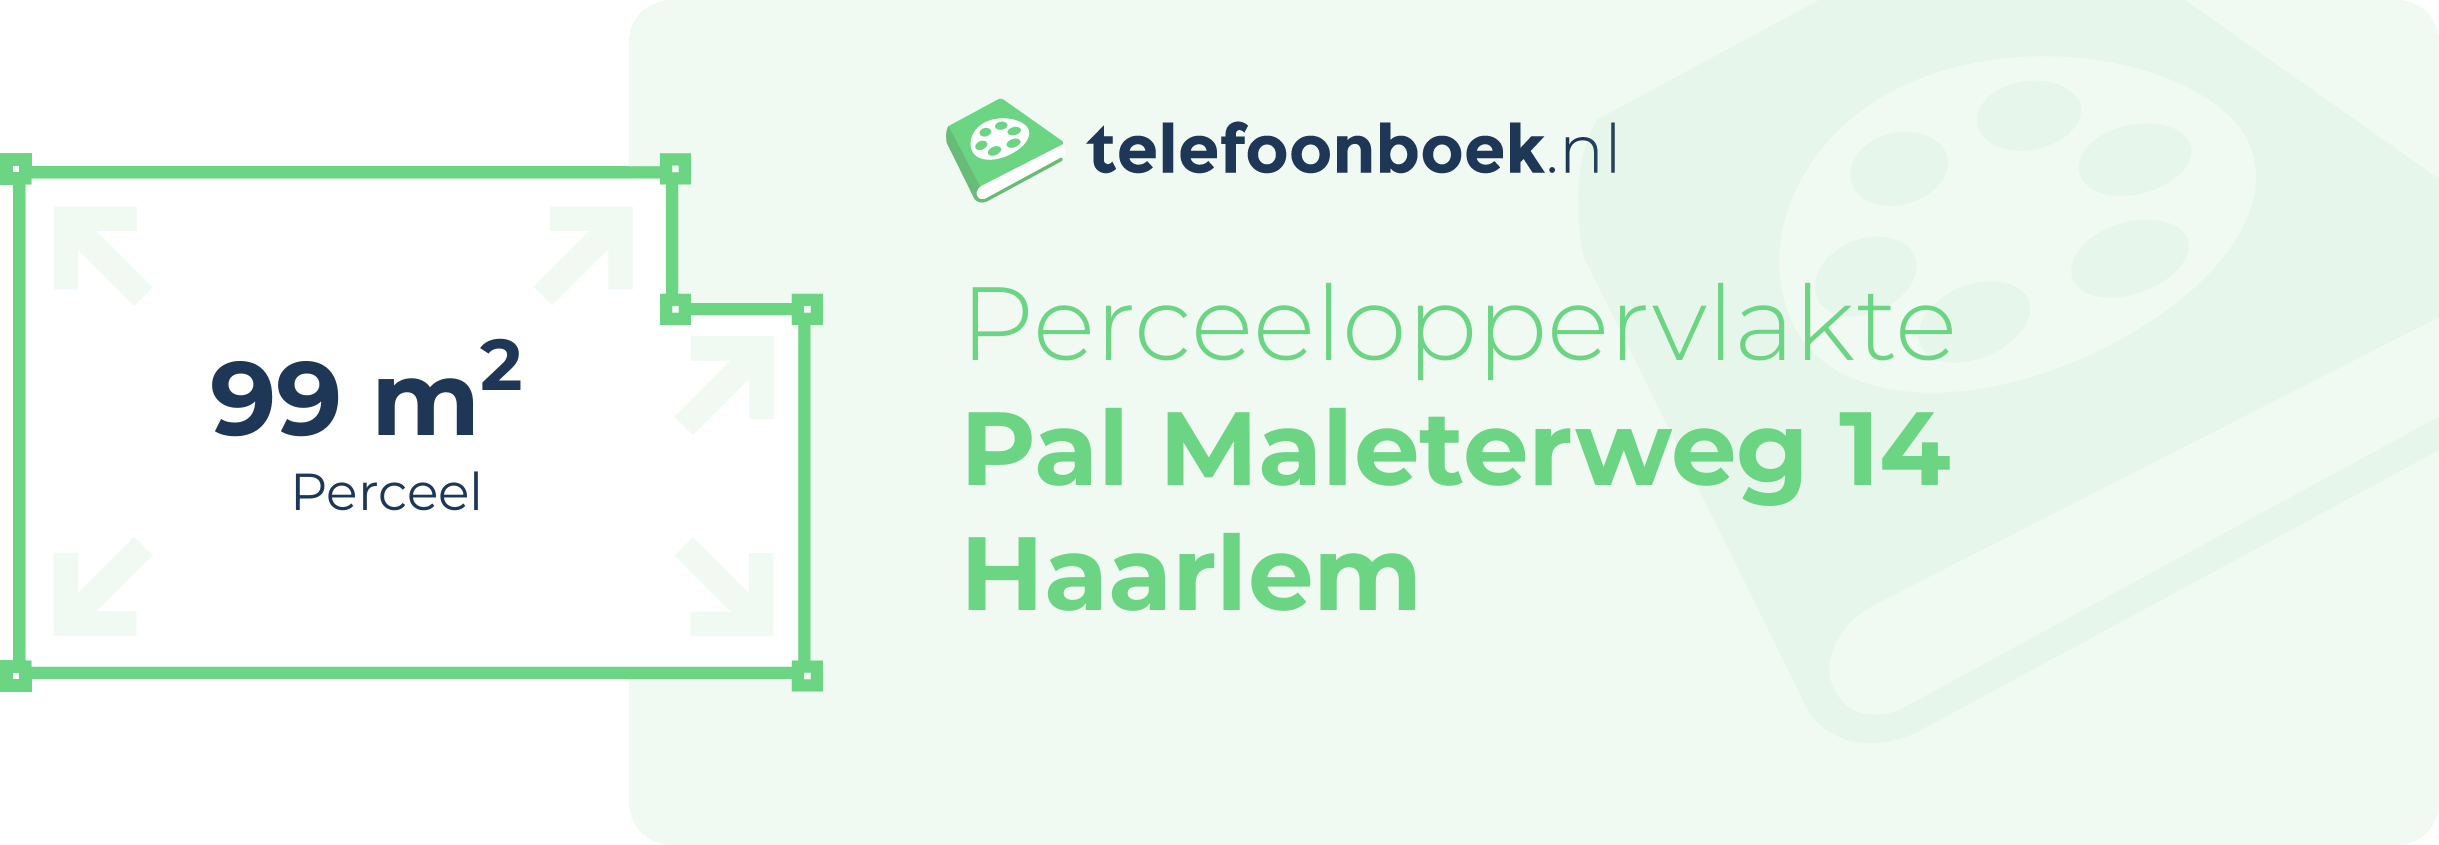 Perceeloppervlakte Pal Maleterweg 14 Haarlem